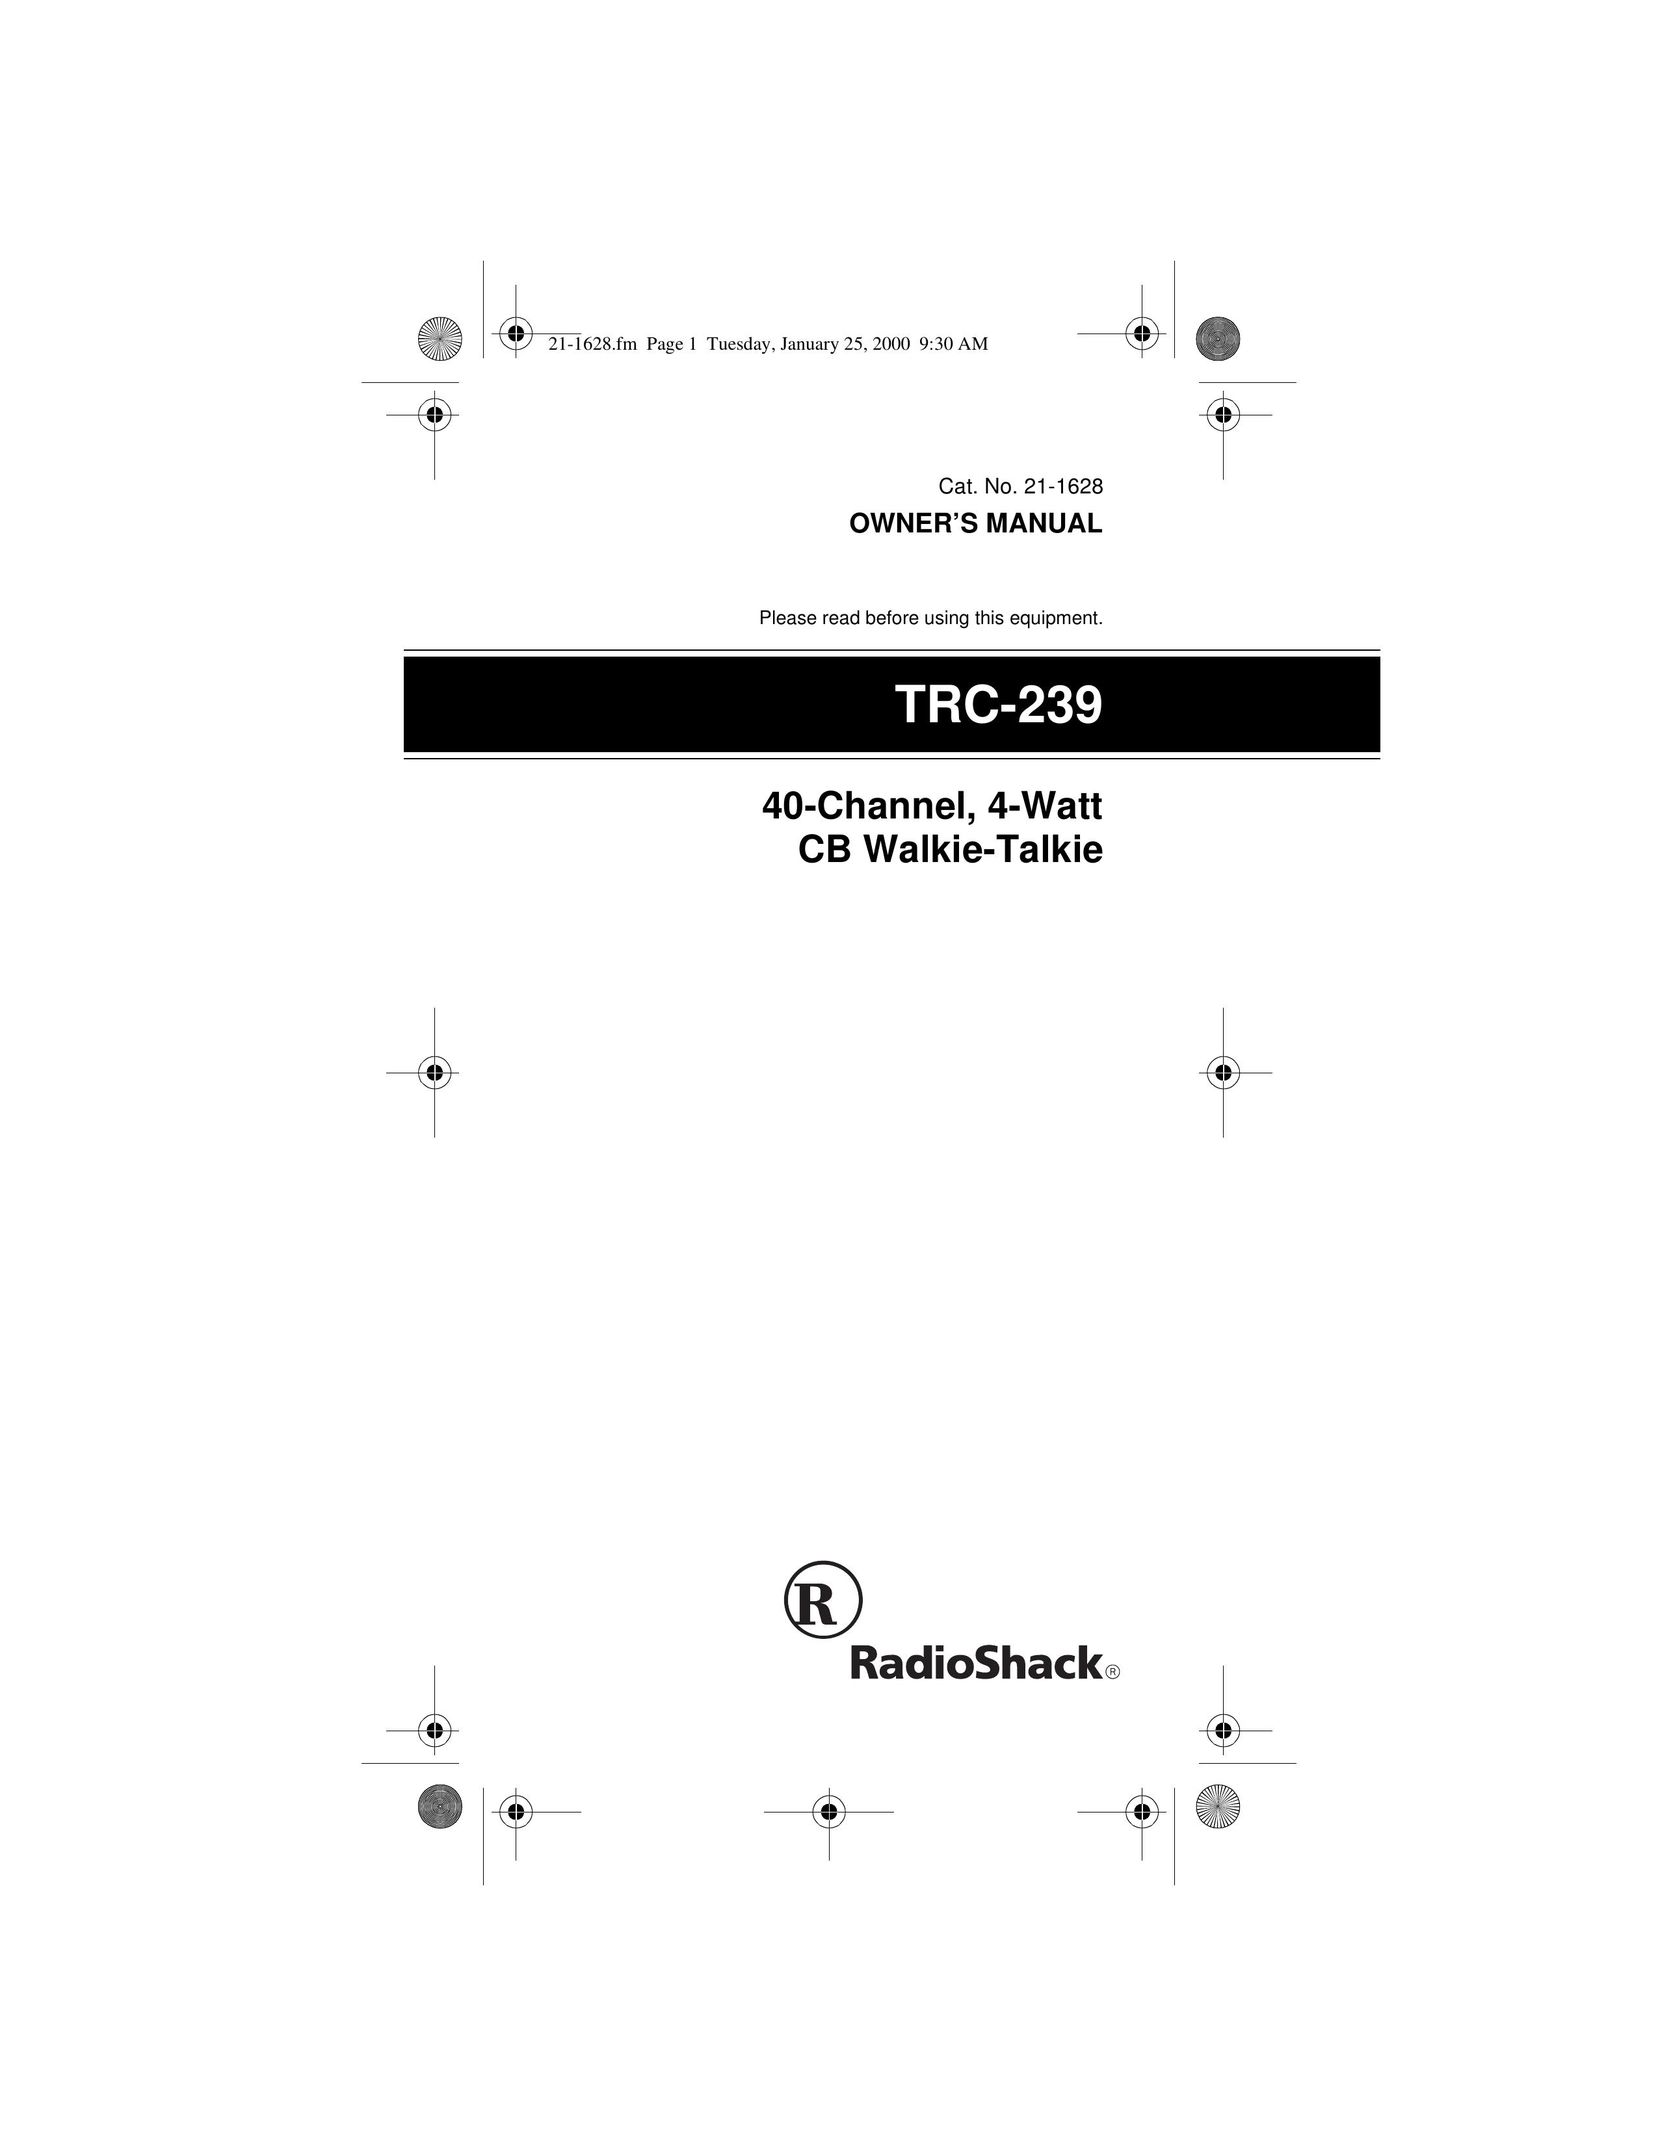 Radio Shack TRC-239 Two-Way Radio User Manual